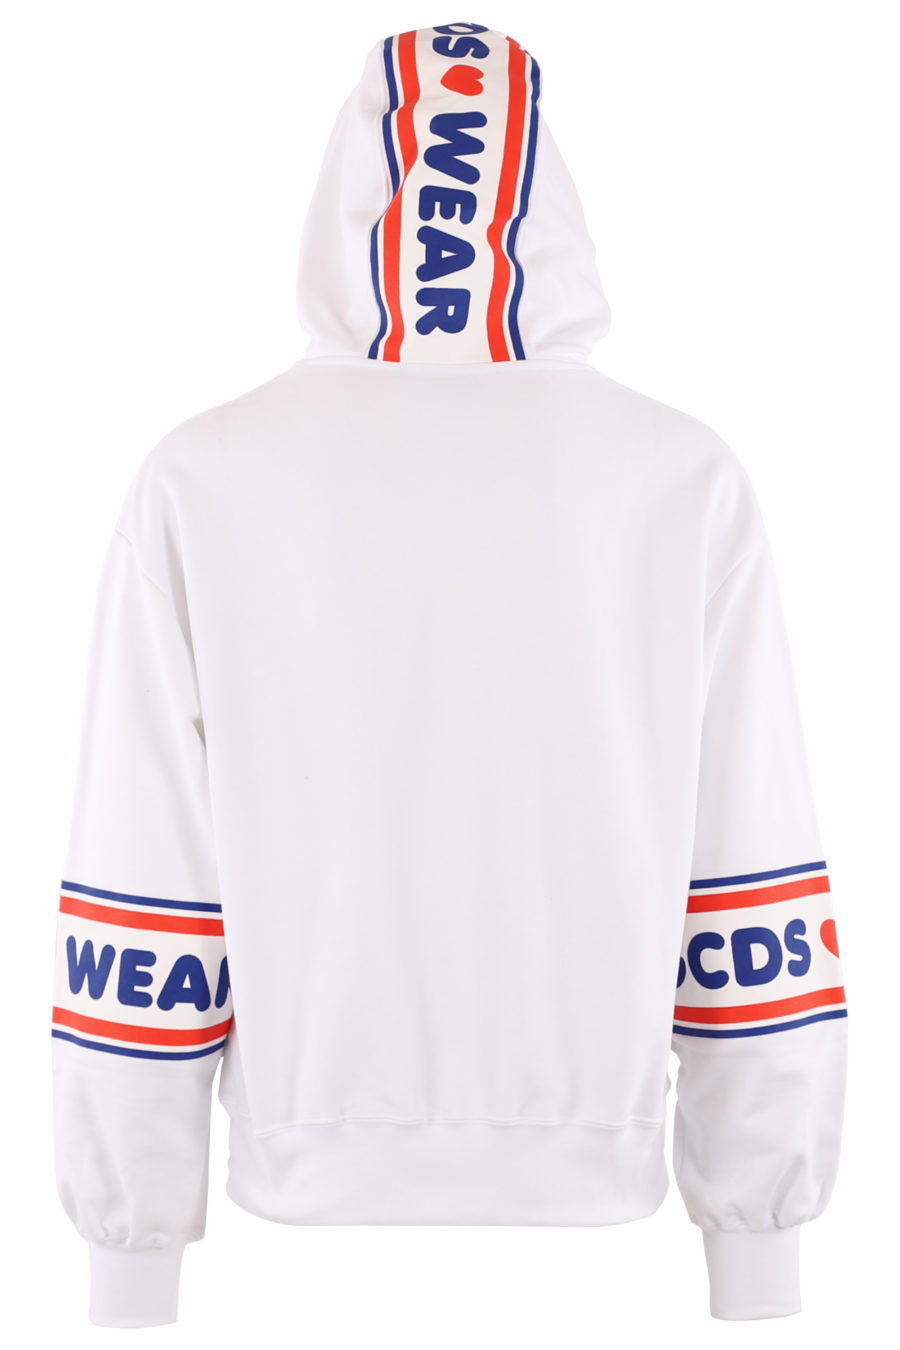 White hooded sweatshirt with logo print - be8ff41185cb7206cef9a1a4c14828ab147db6ed